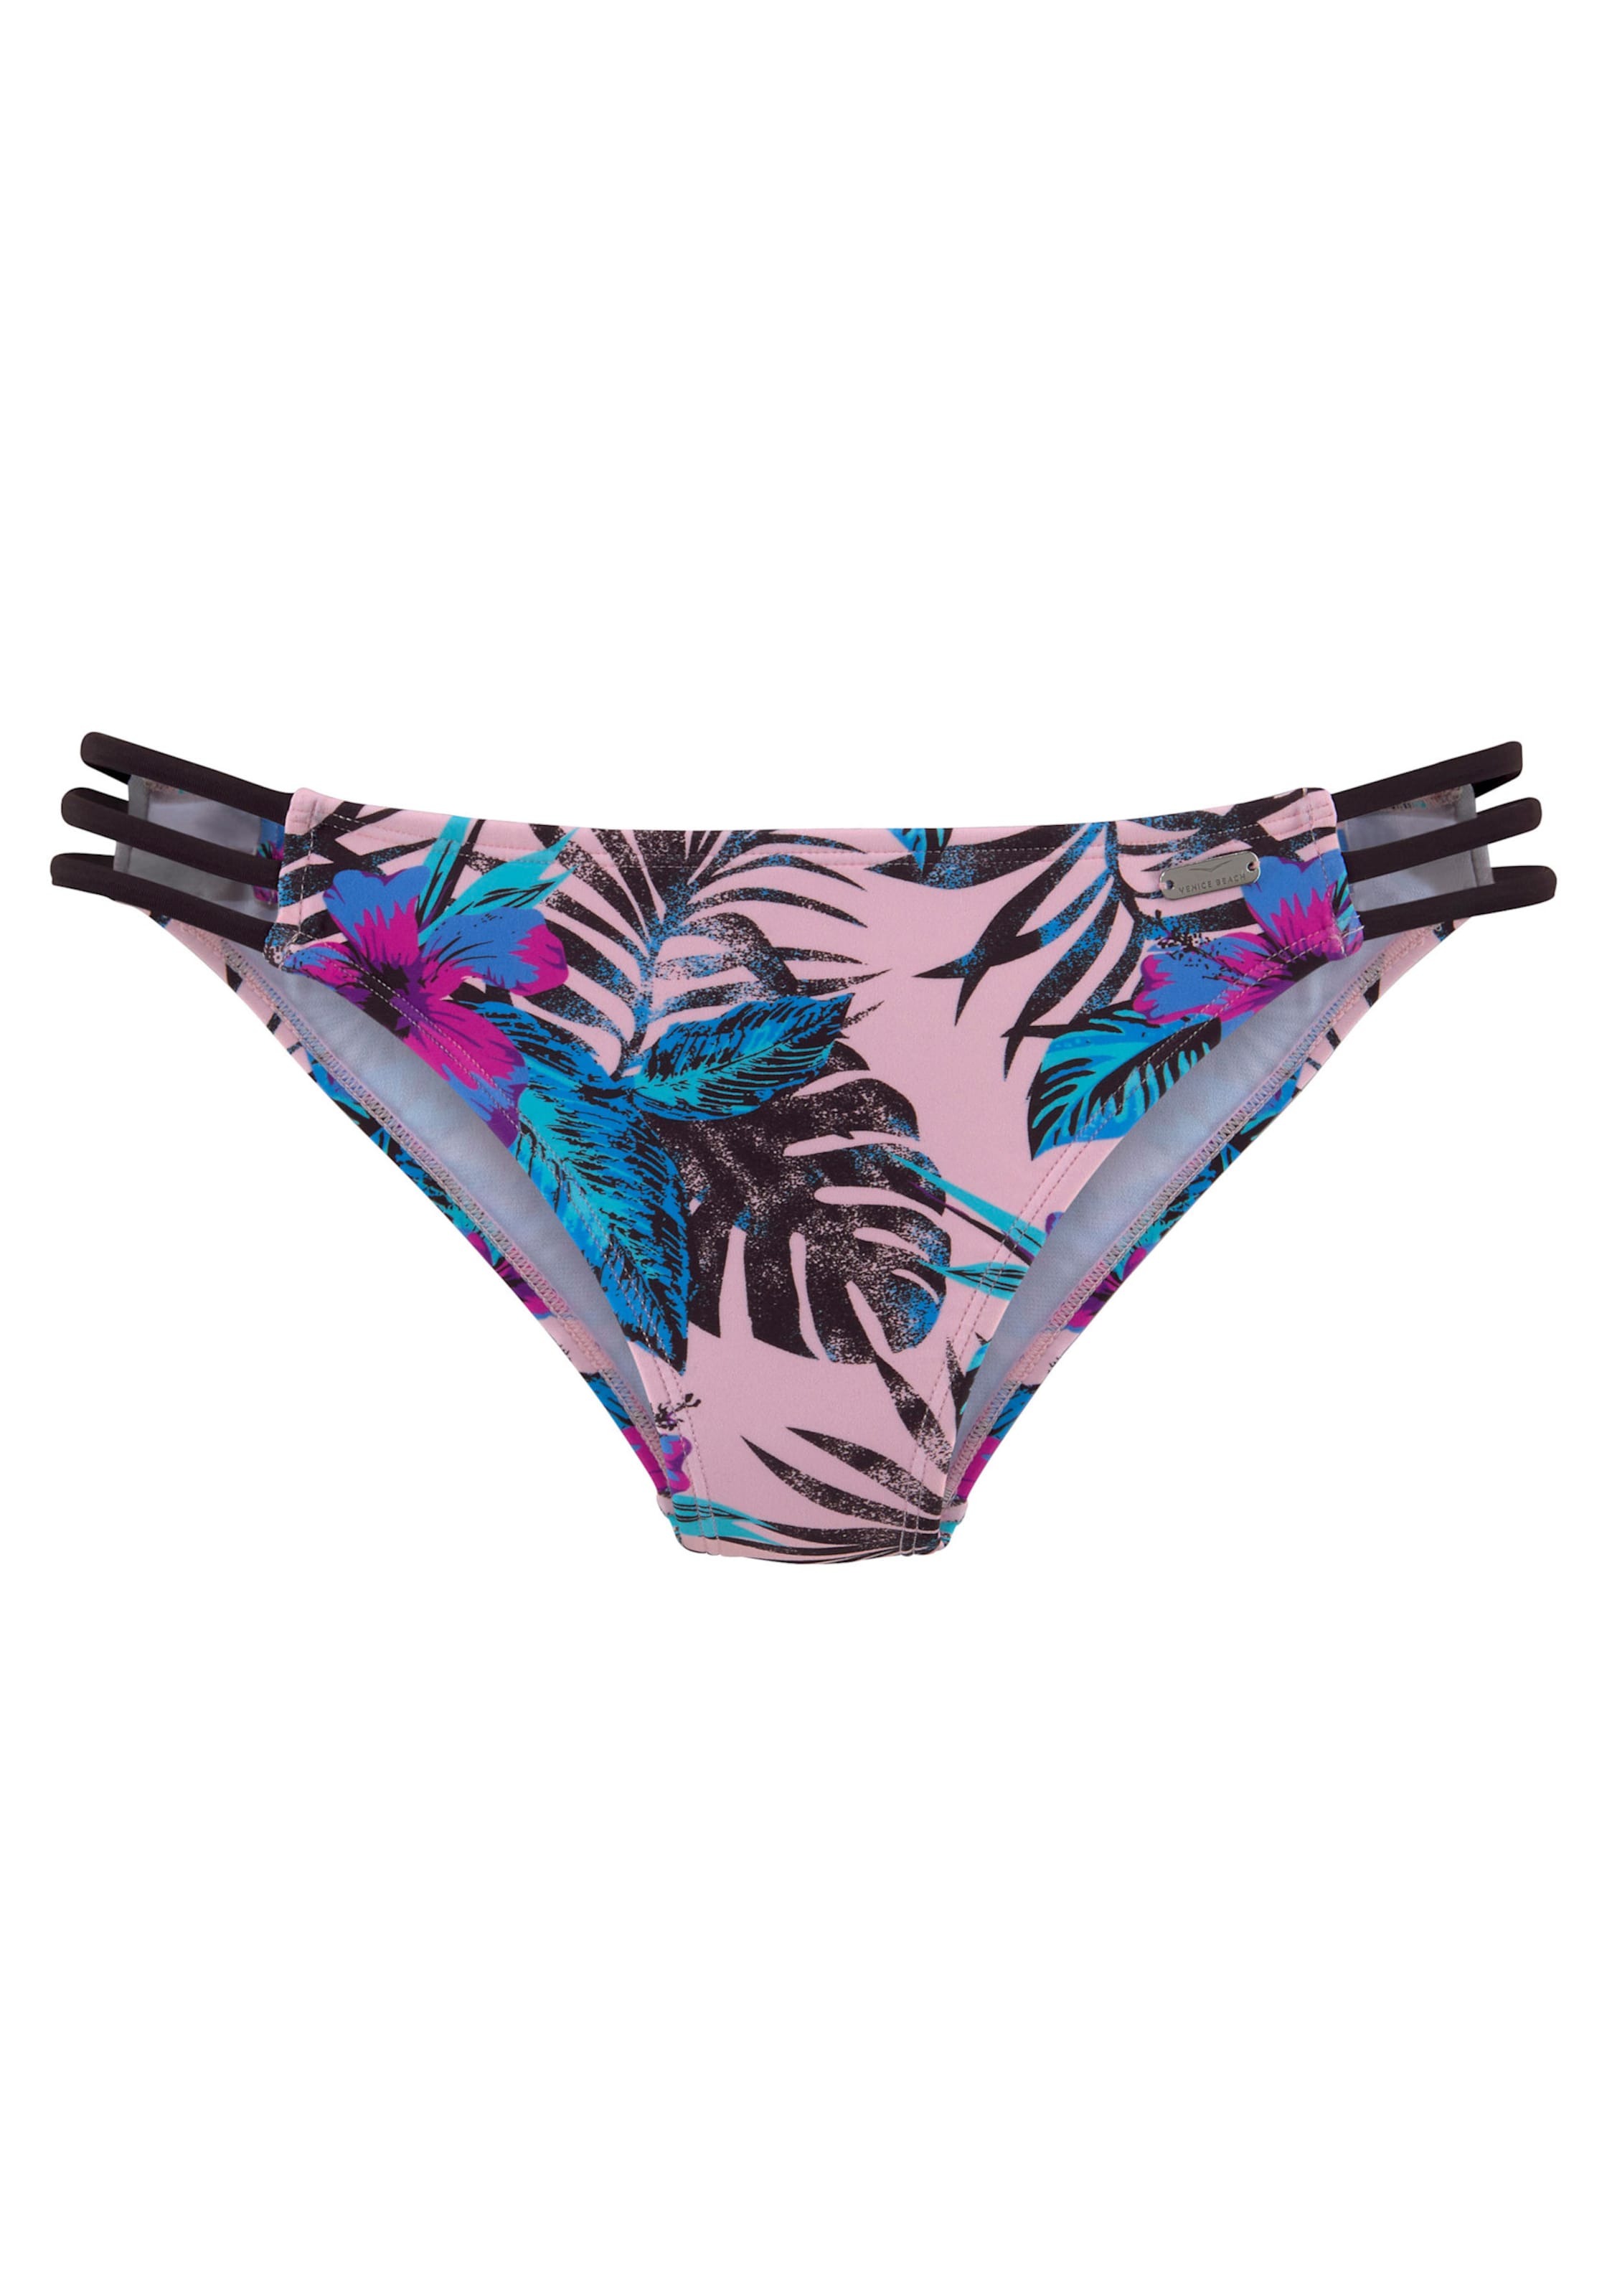 Nic ki günstig Kaufen-Bikini-Hose in rosa-bedruckt von Venice Beach. Bikini-Hose in rosa-bedruckt von Venice Beach <![CDATA[Bikini-Hose mit seitlichen Bändern von Venice Beach. Florales Design. Obermaterial: 80% Polyamid, 20% Elasthan LYCRA® XTRA LIFE™. Futter: 100% Polyes